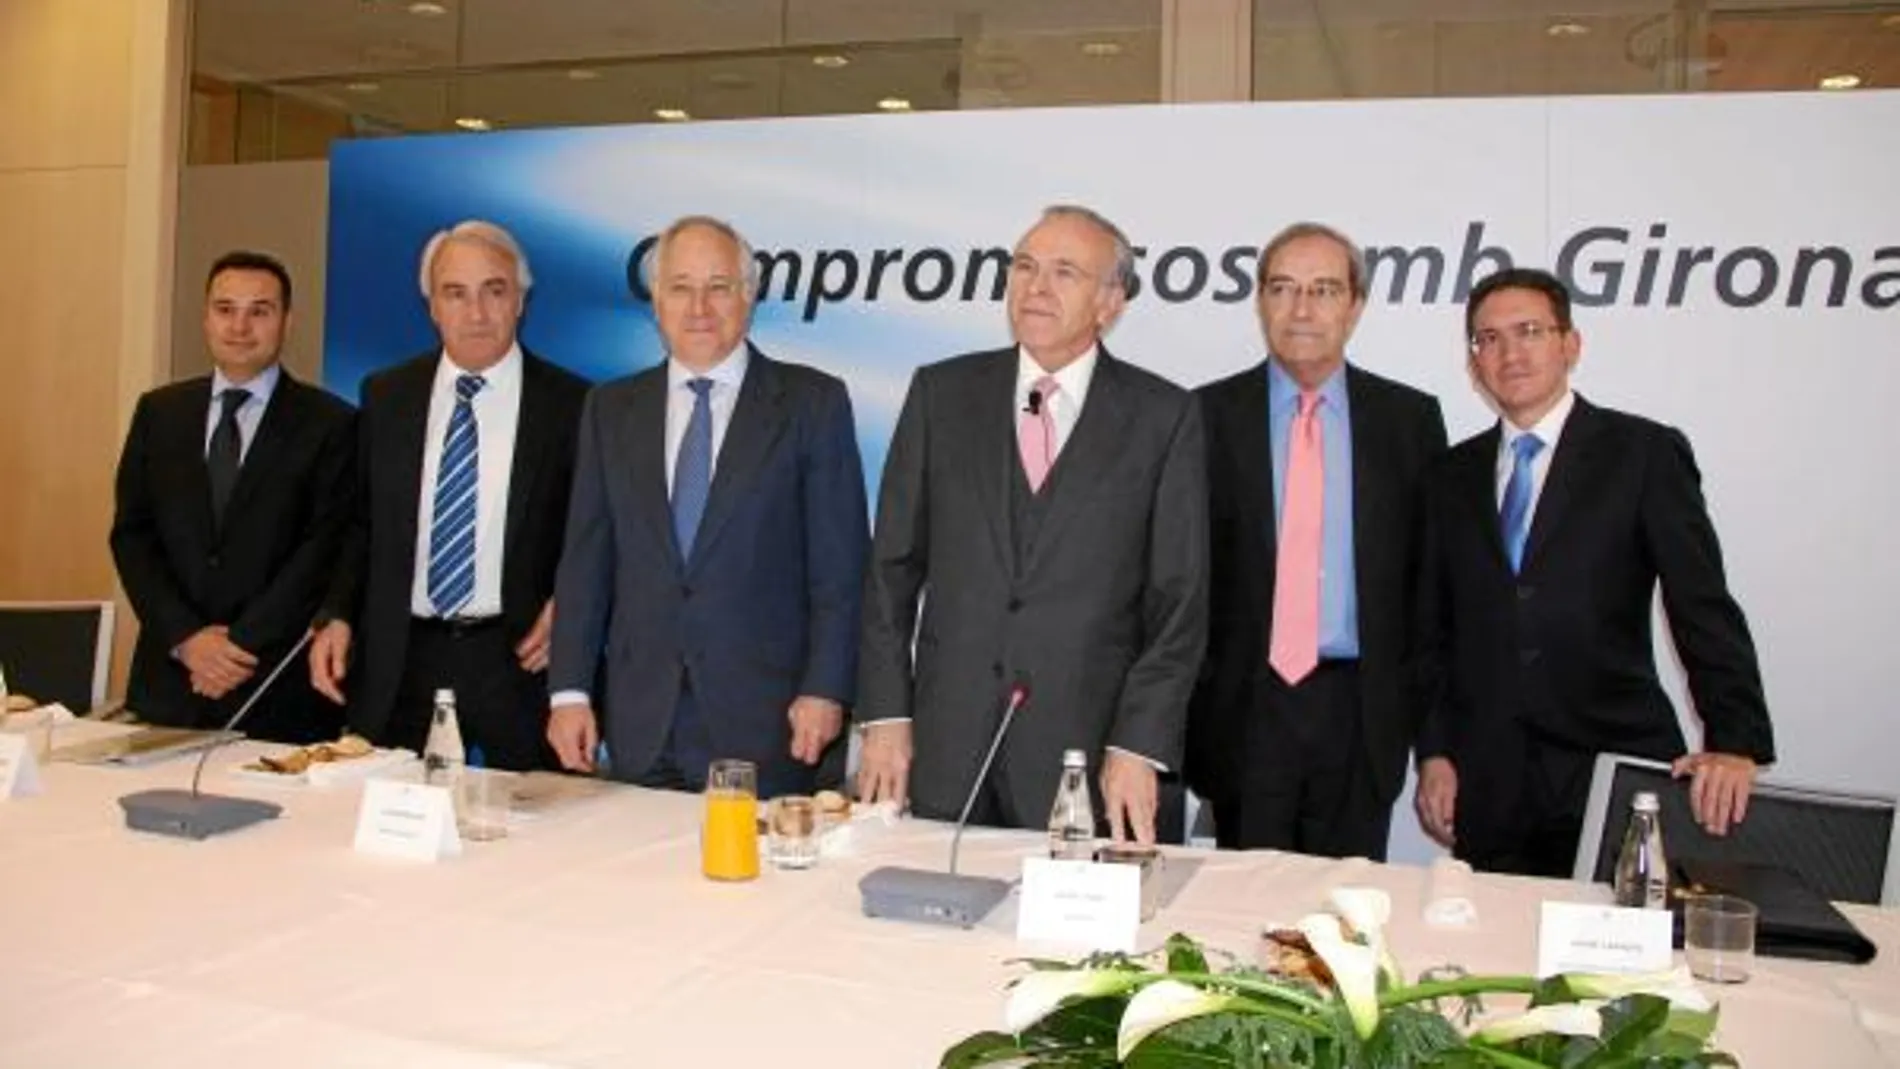 En la foto, Jordi Nicolau, Manuel Romera, Juan María Nin, Isidro Fainé, Jaume Lanasapa y Jaume Giró